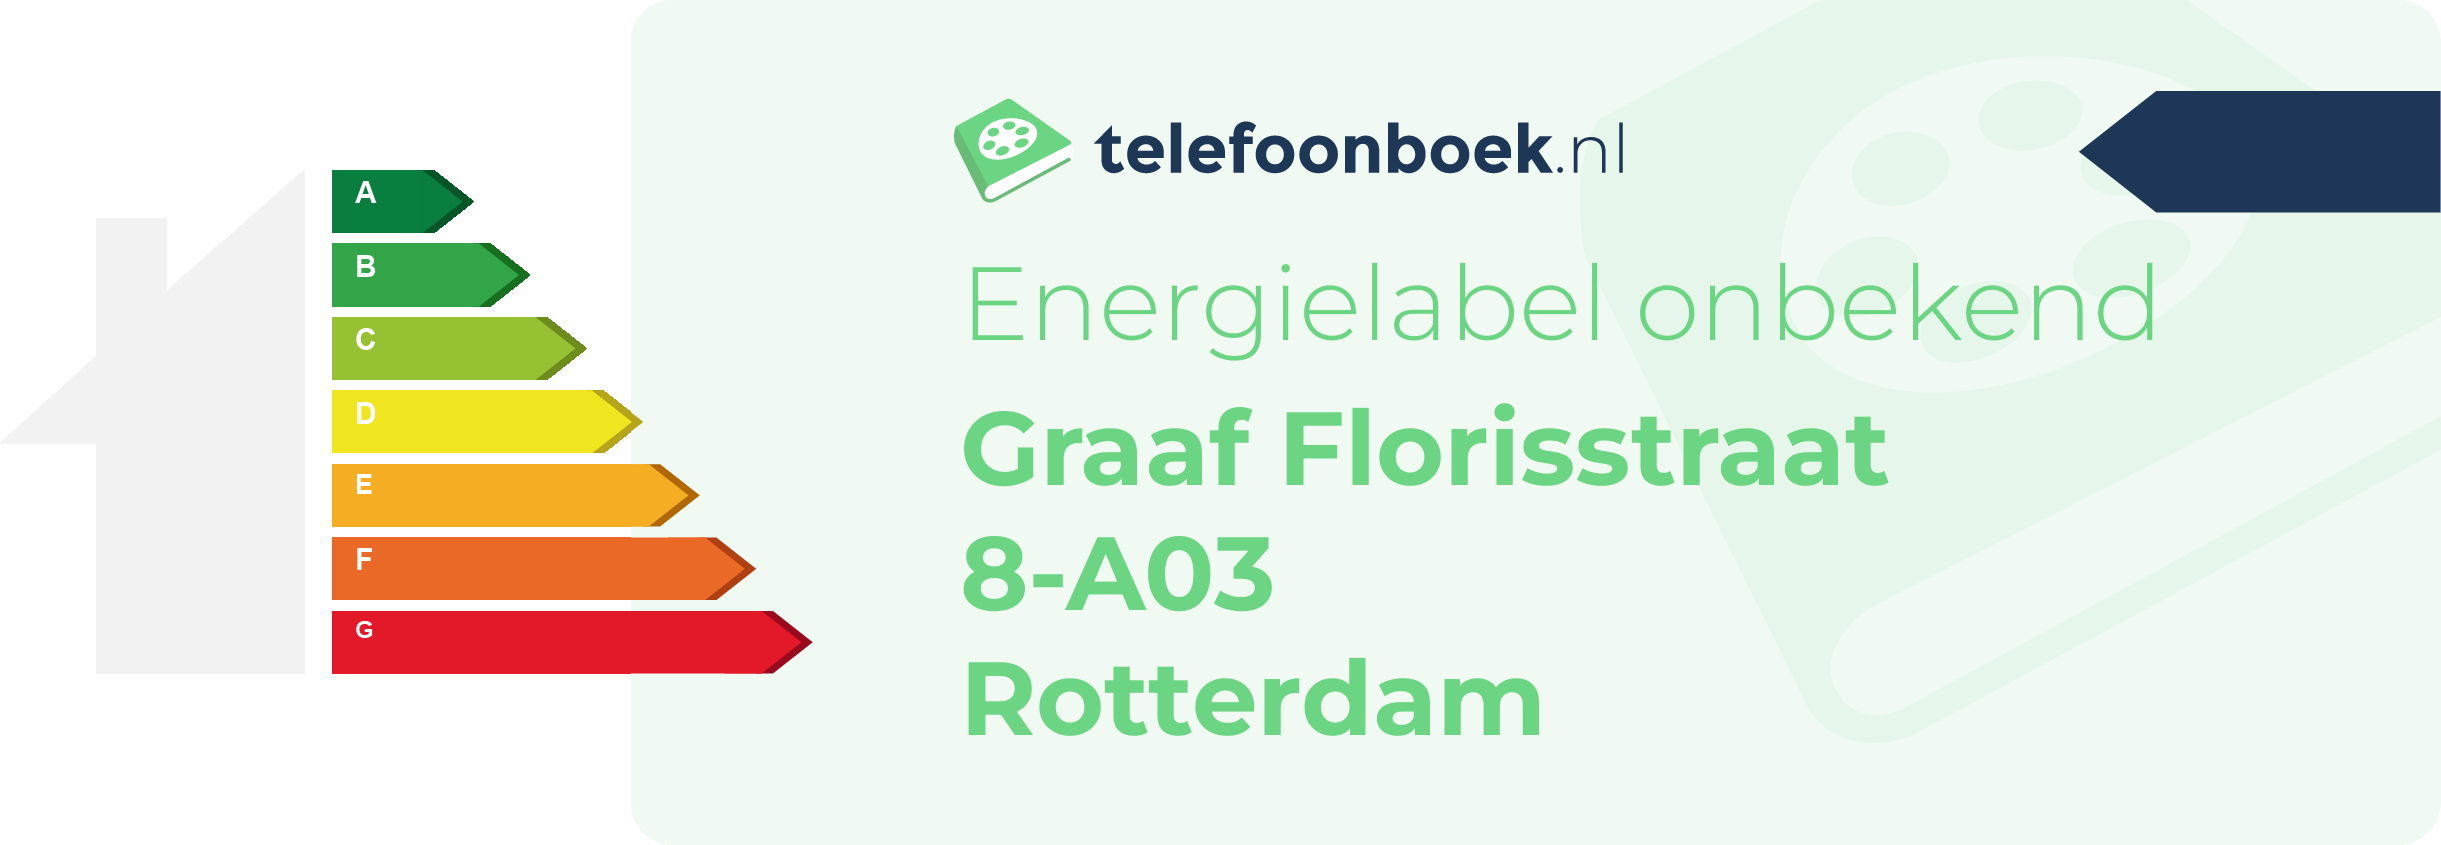 Energielabel Graaf Florisstraat 8-A03 Rotterdam